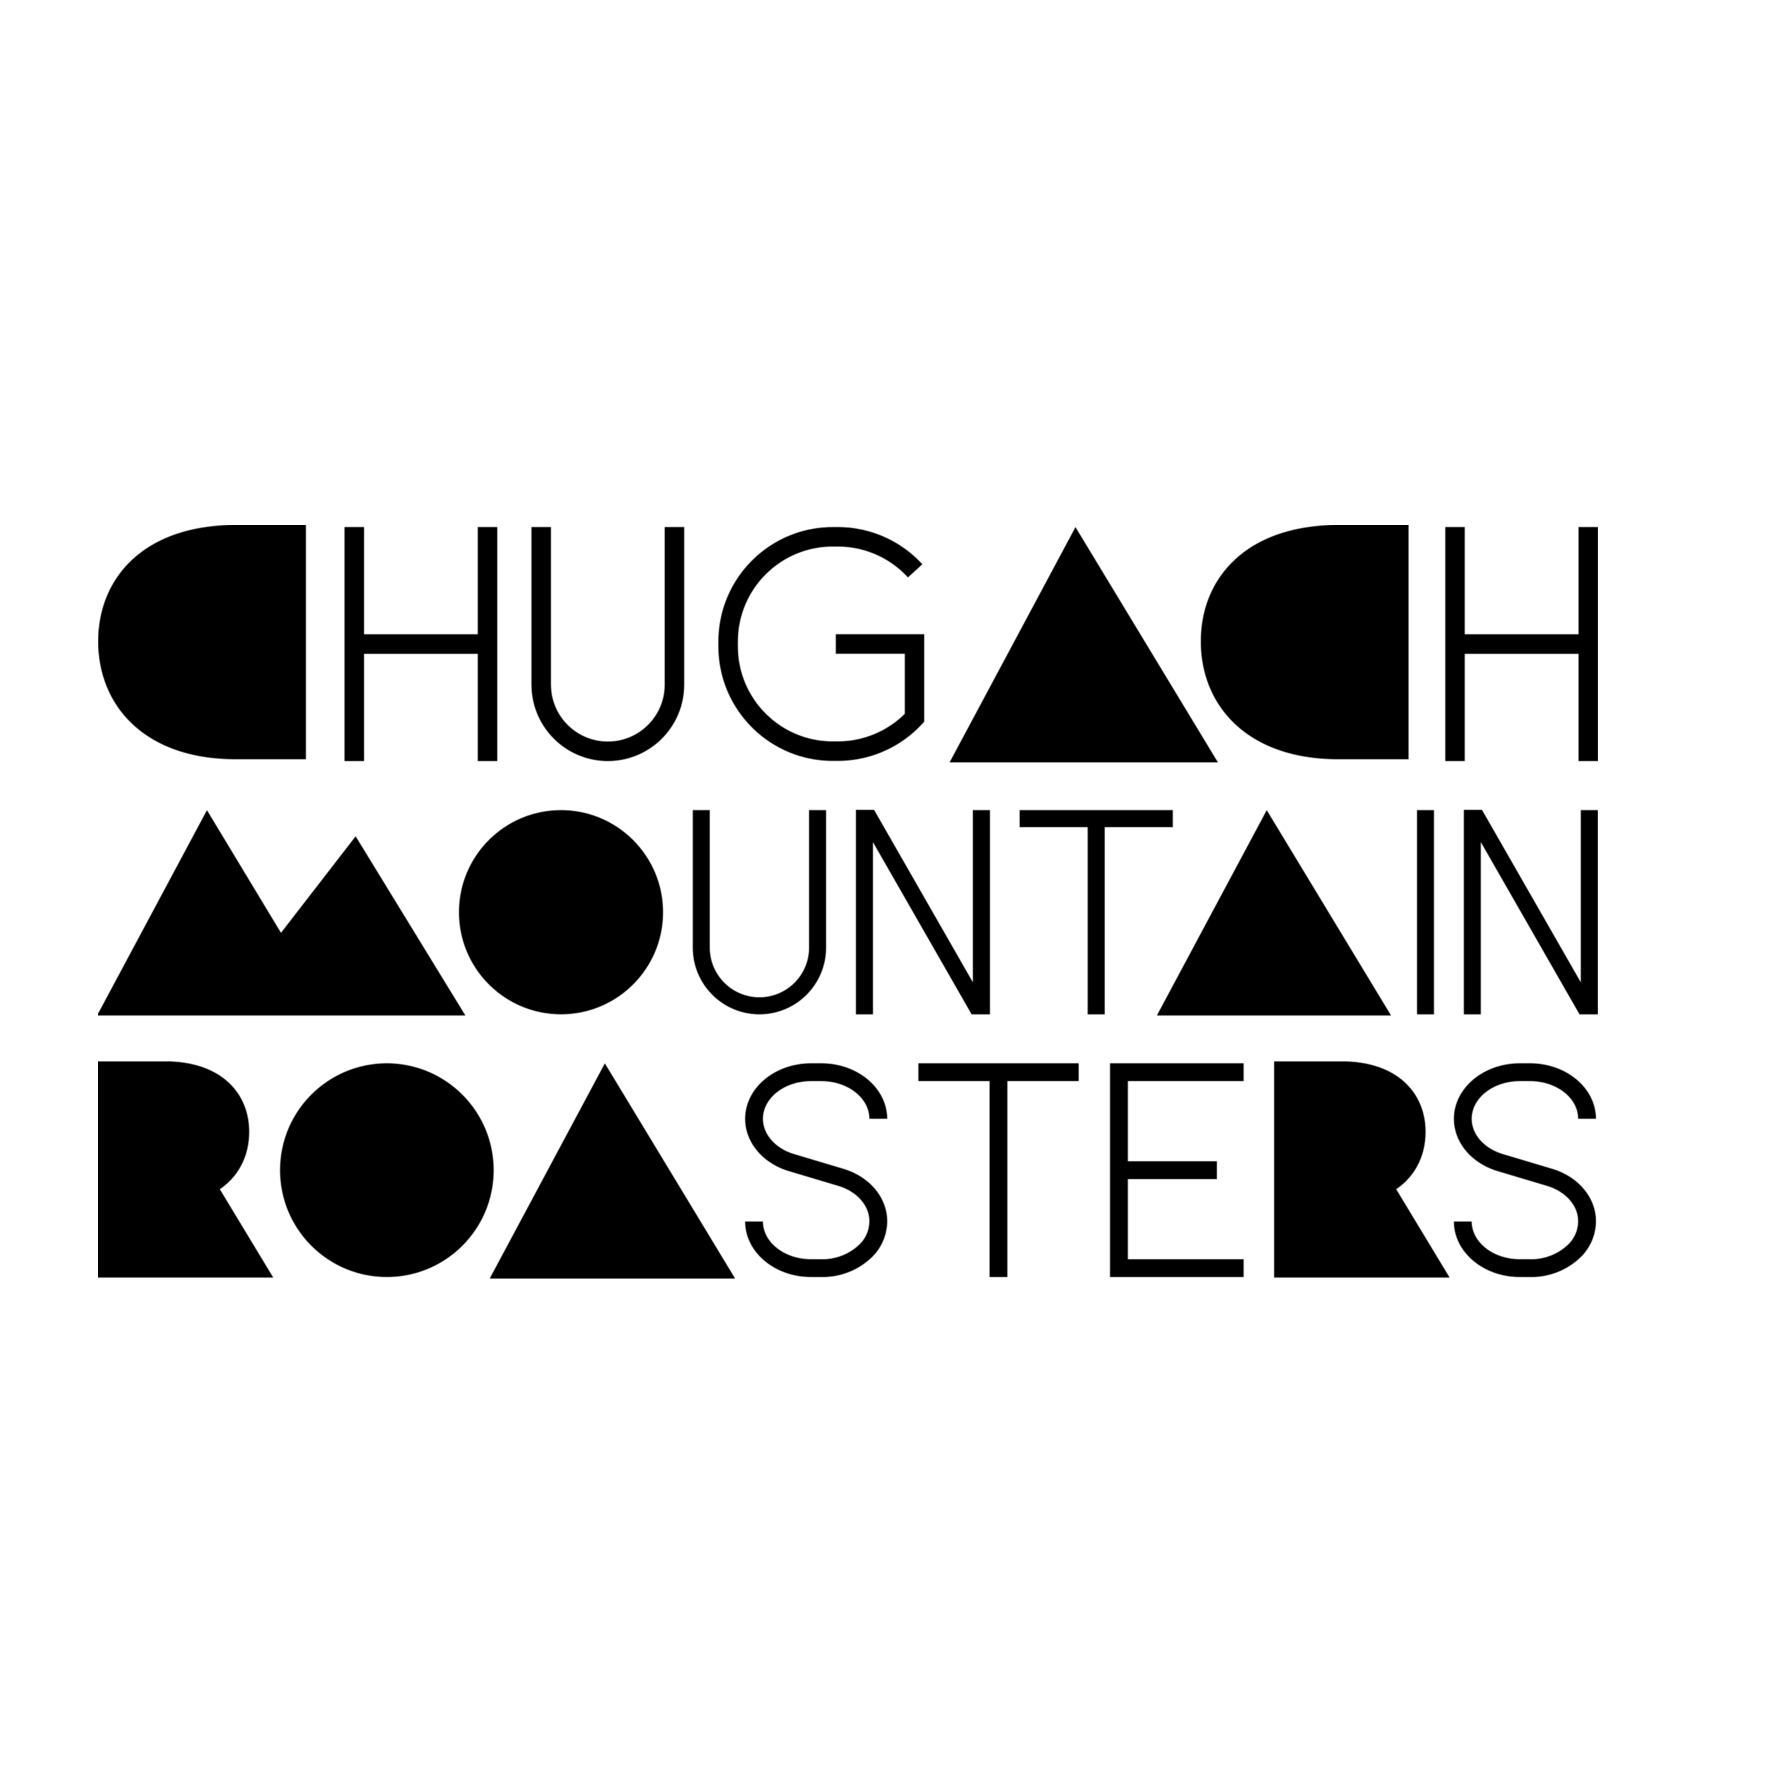 Chugach Mountain Roasters